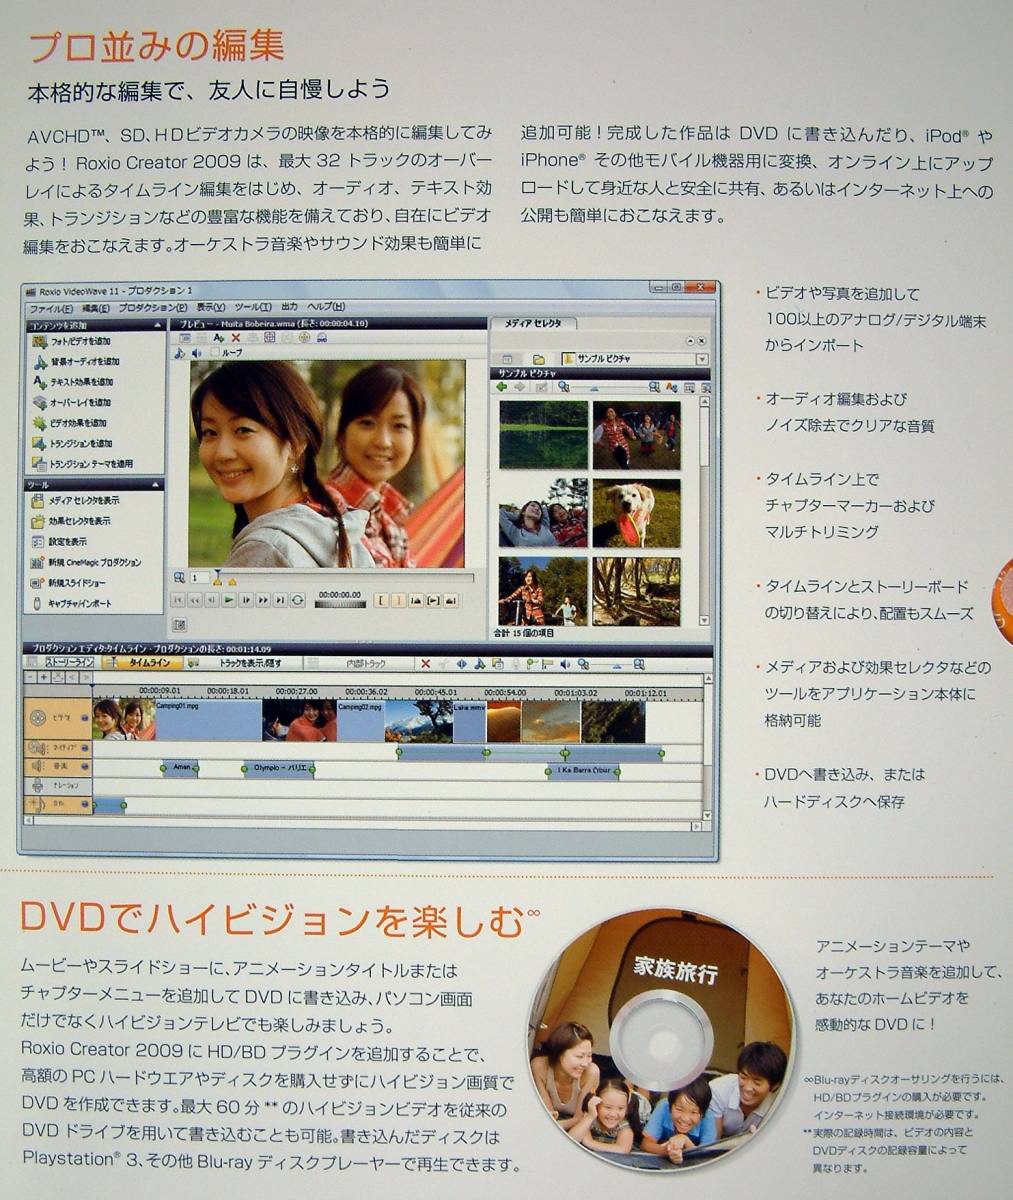 [2937] 4560131730598 Roxio Creator 2009 new goods CD/DVD writing soft lighting rokisi ok lie-ta editing o-sa ring video music 